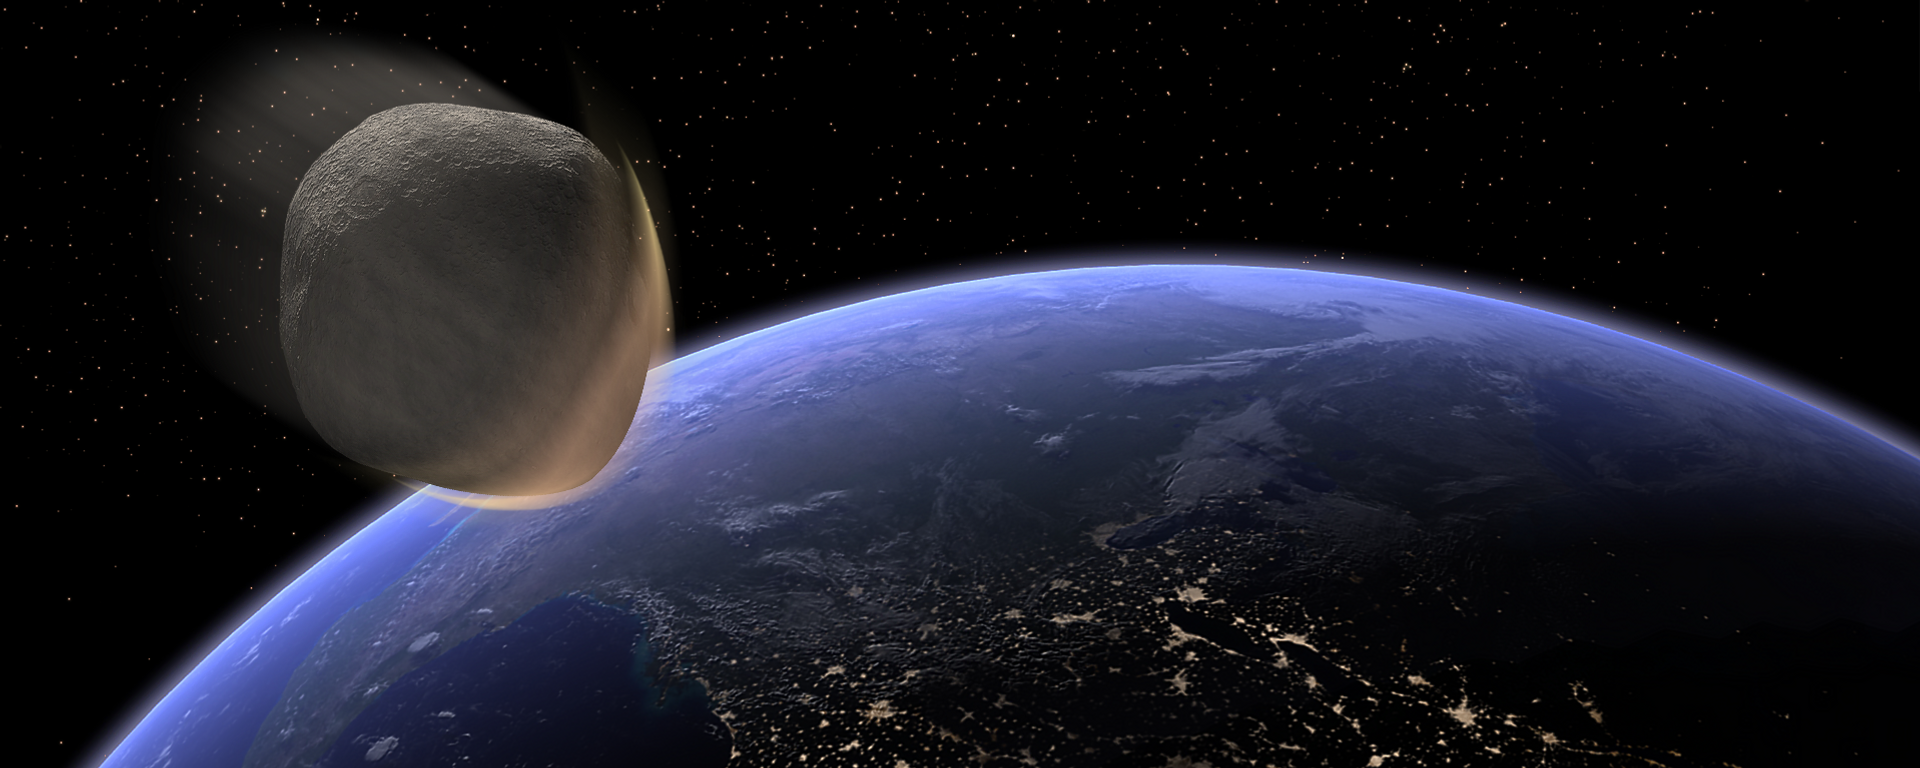 Un asteroide se acerca a la Tierra (imagen referencial) - Sputnik Mundo, 1920, 21.01.2020